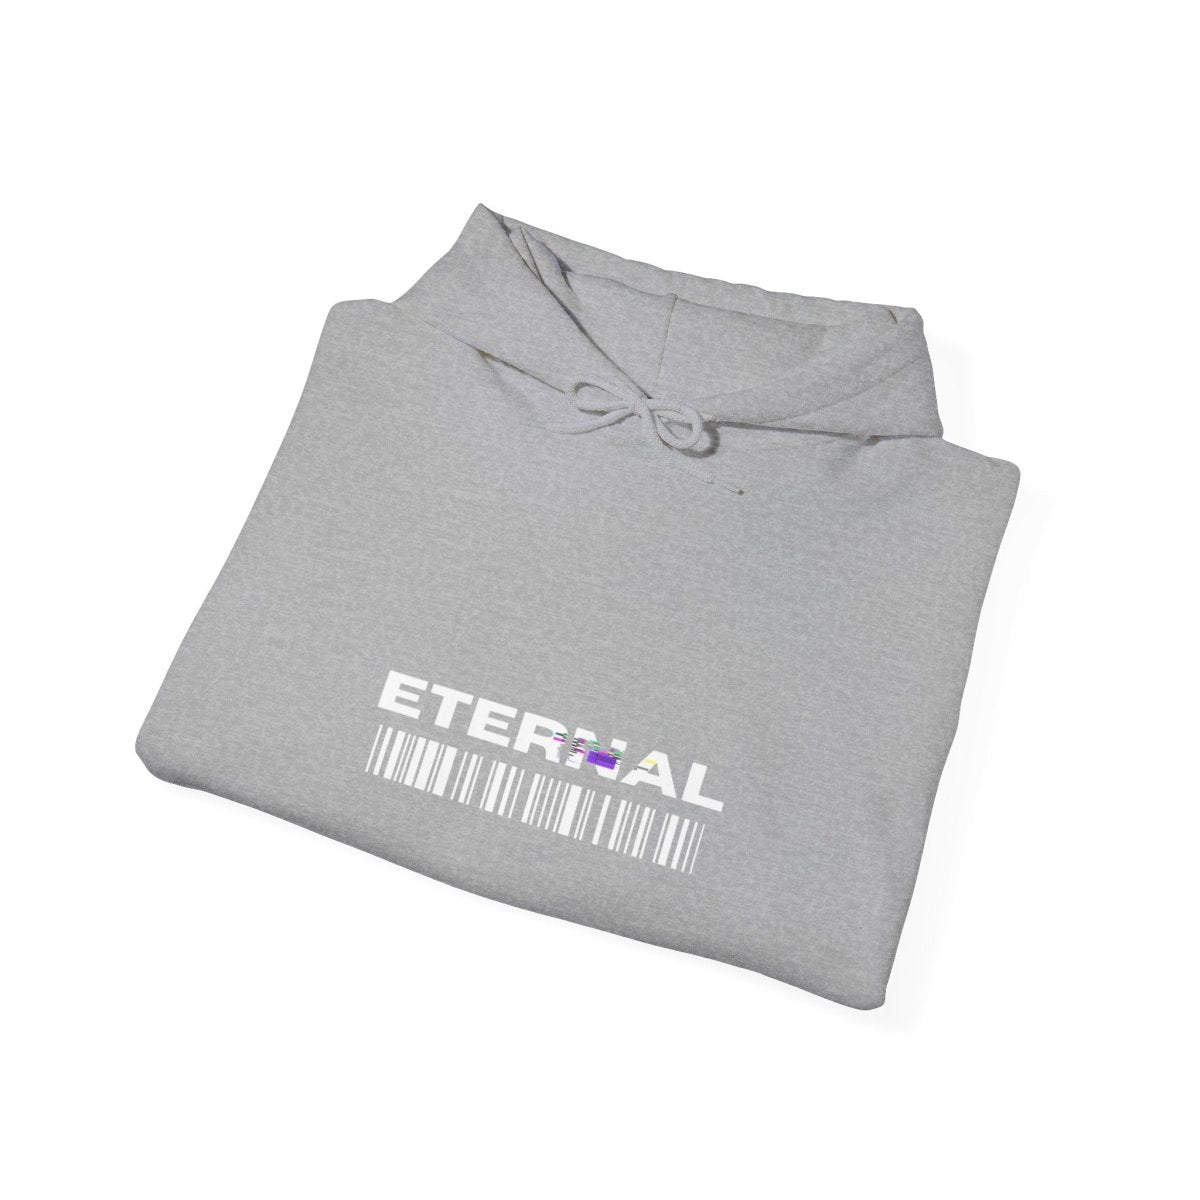 Eternal Hooded Sweatshirt - Unthreaded